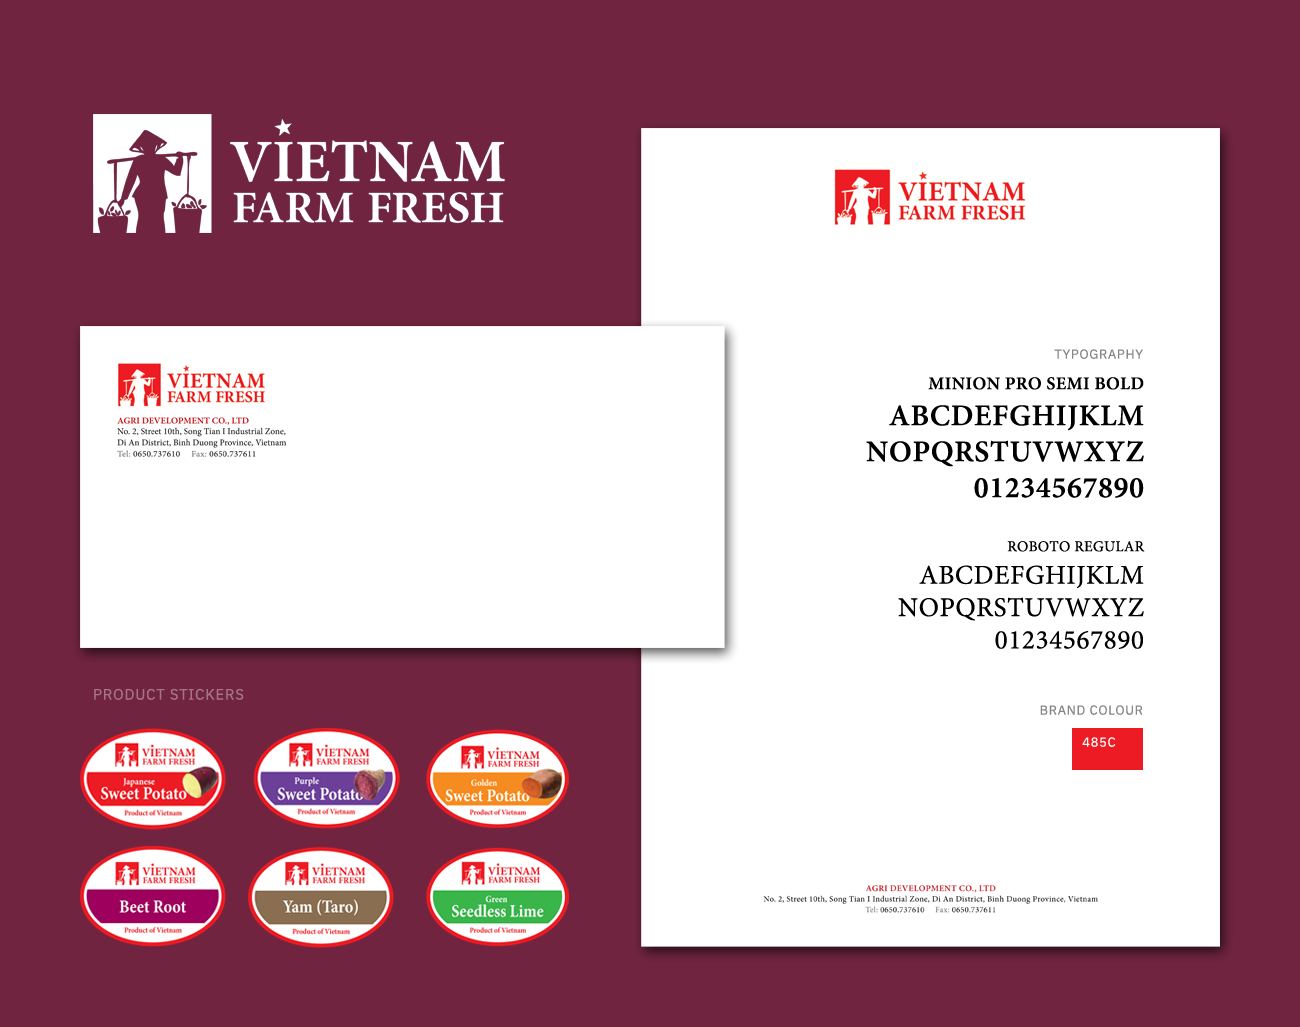 Vietnam Farm Fresh Branding, Ease Communications